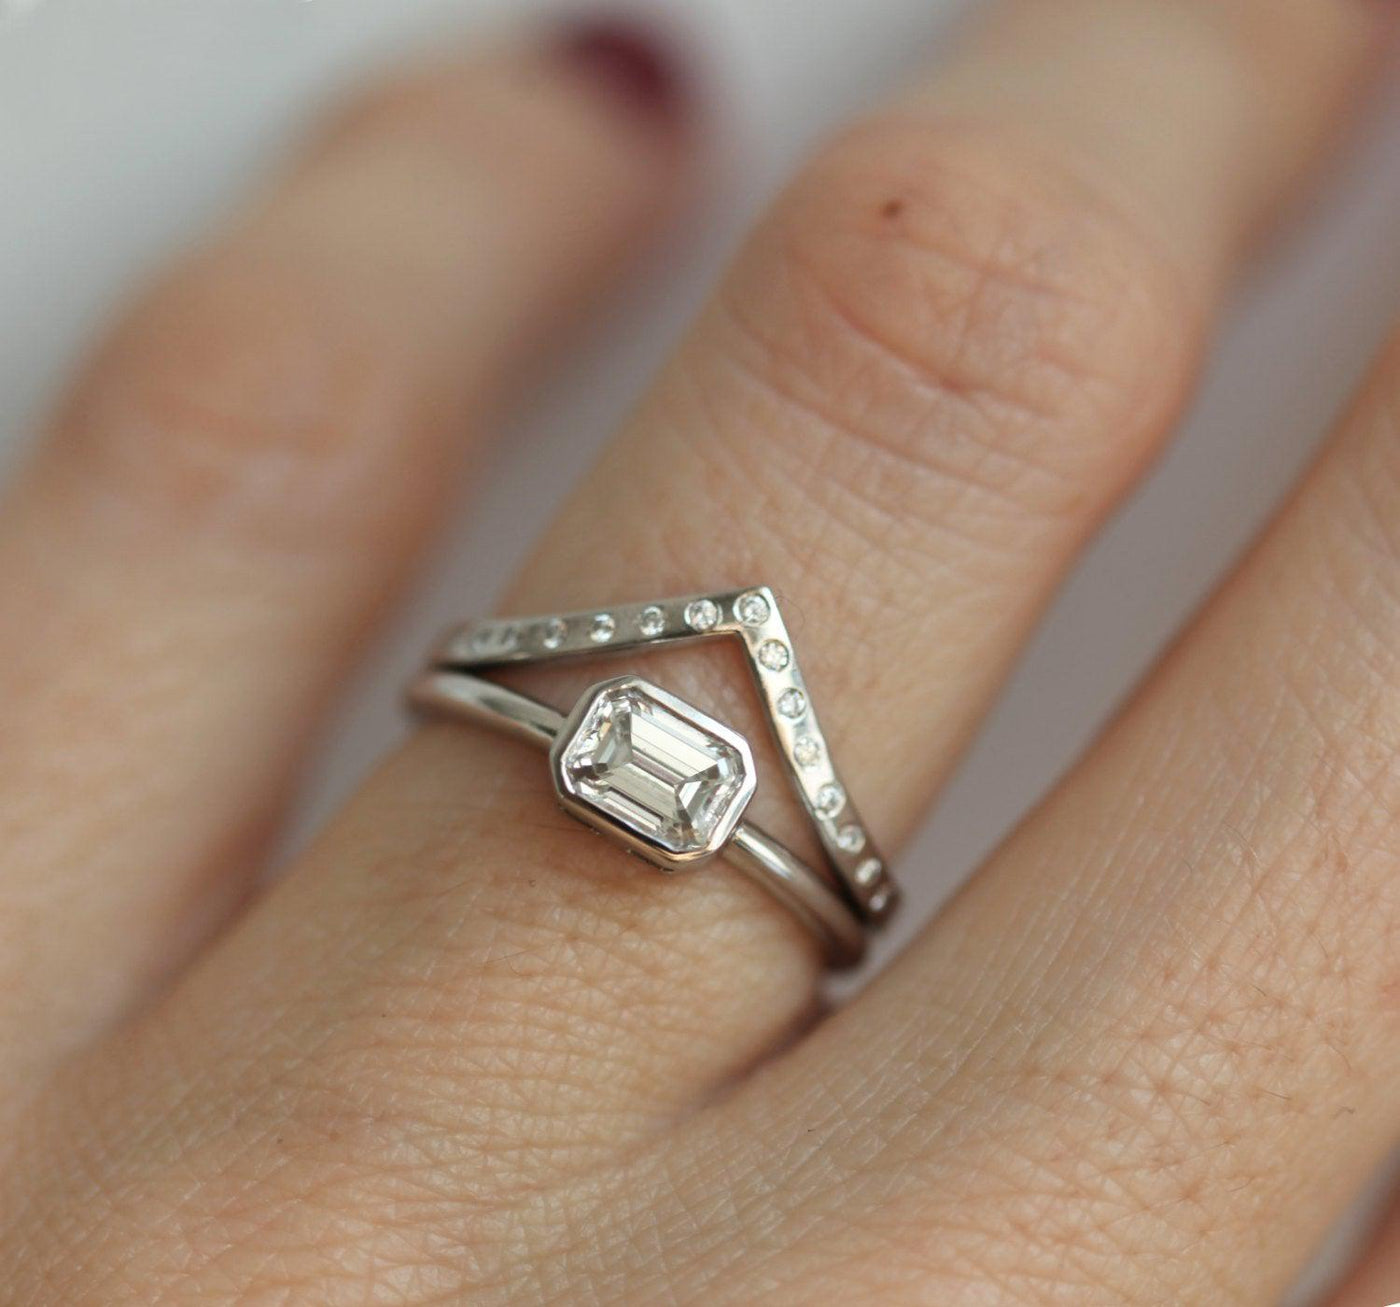 Emerald-Cut White Diamond with Upper V-Shape Diamond Ring making up a wedding ring